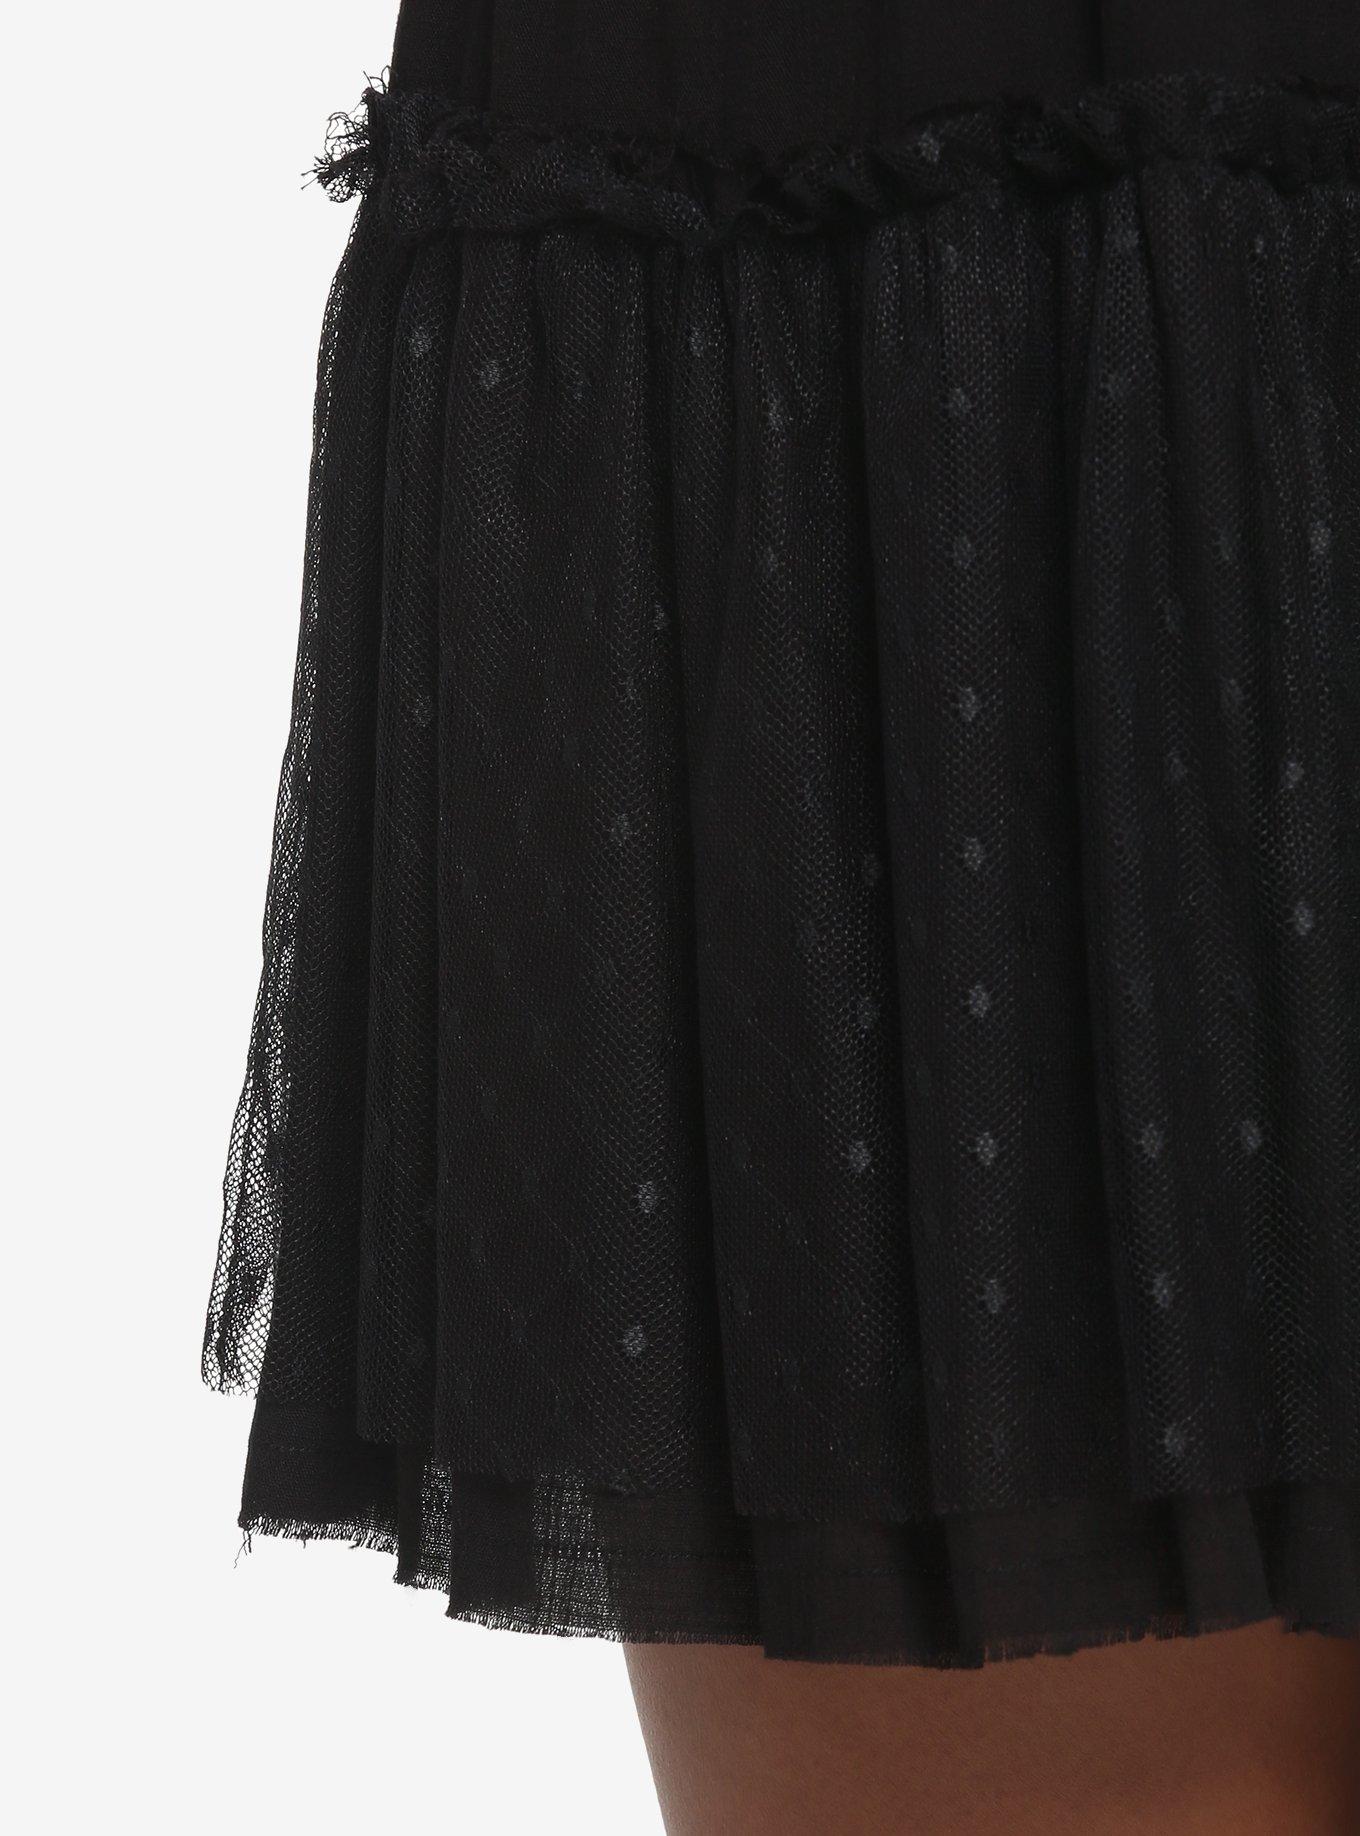 Black Tiered Halter Dress, BLACK, alternate